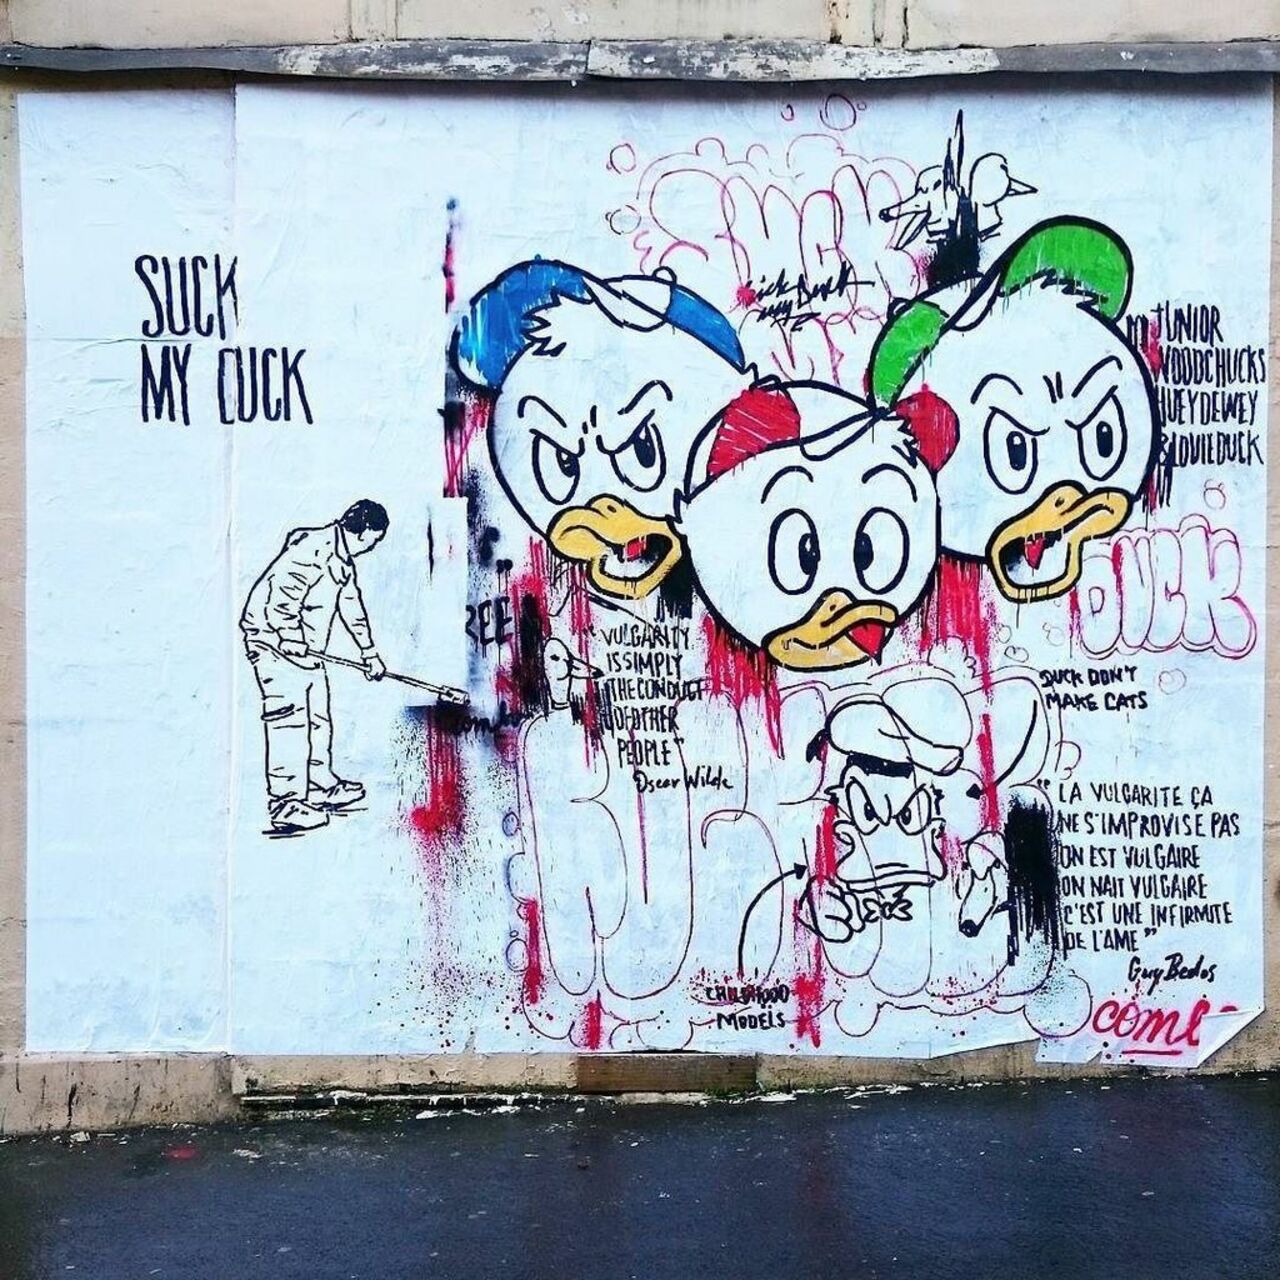 ● SUCK MY DUCK ●
#Quote #streetart #spraypaint #stencils #painting #pastup #graffiti #urbanart #artist #combo #comb… https://t.co/fG7aXlZtpg